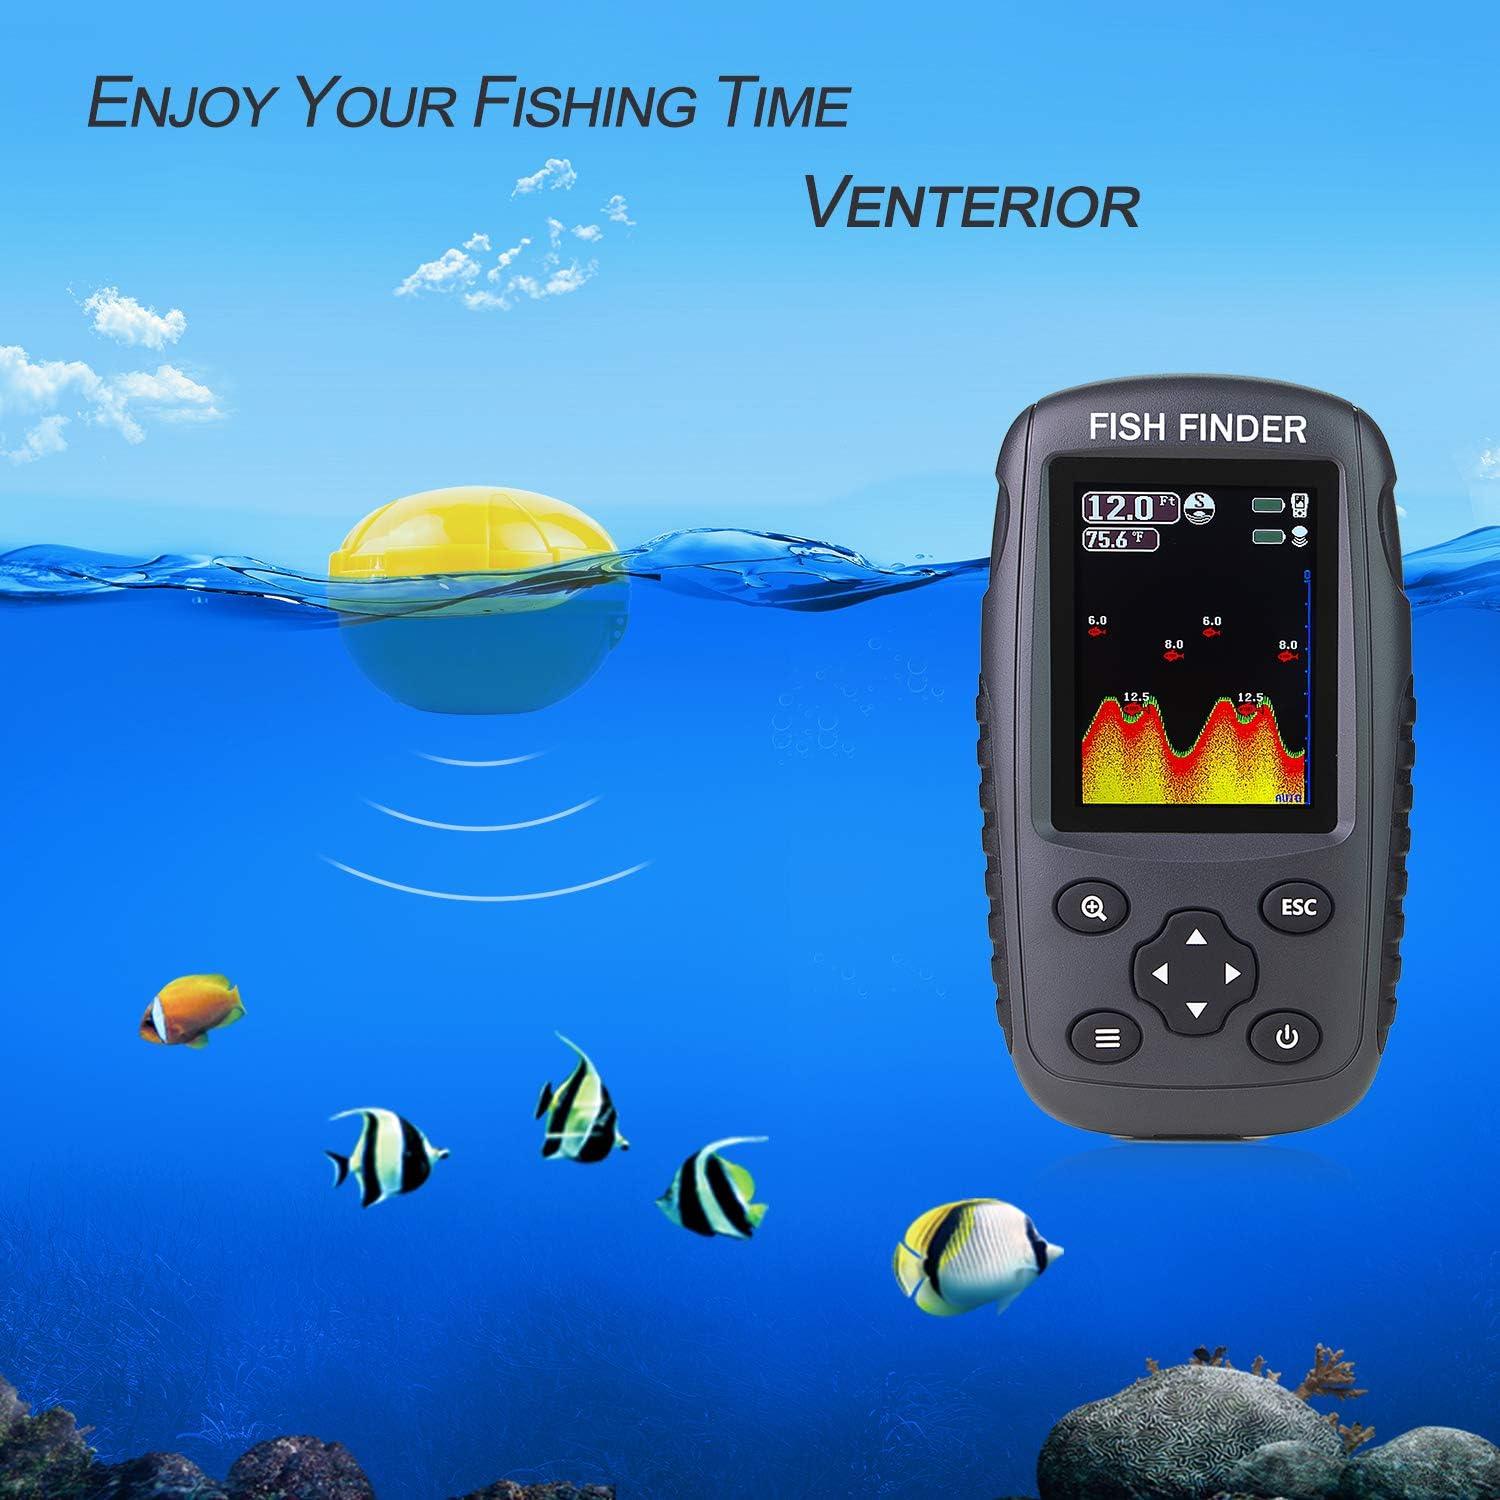 Venterior Portable Rechargeable Fish Finder Wireless Sonar Sensor Fishfinder Depth Locator with Fish Size, Water Temperature, Bottom Contour, Color LCD Display - Venterior Portable Fish Finder Review